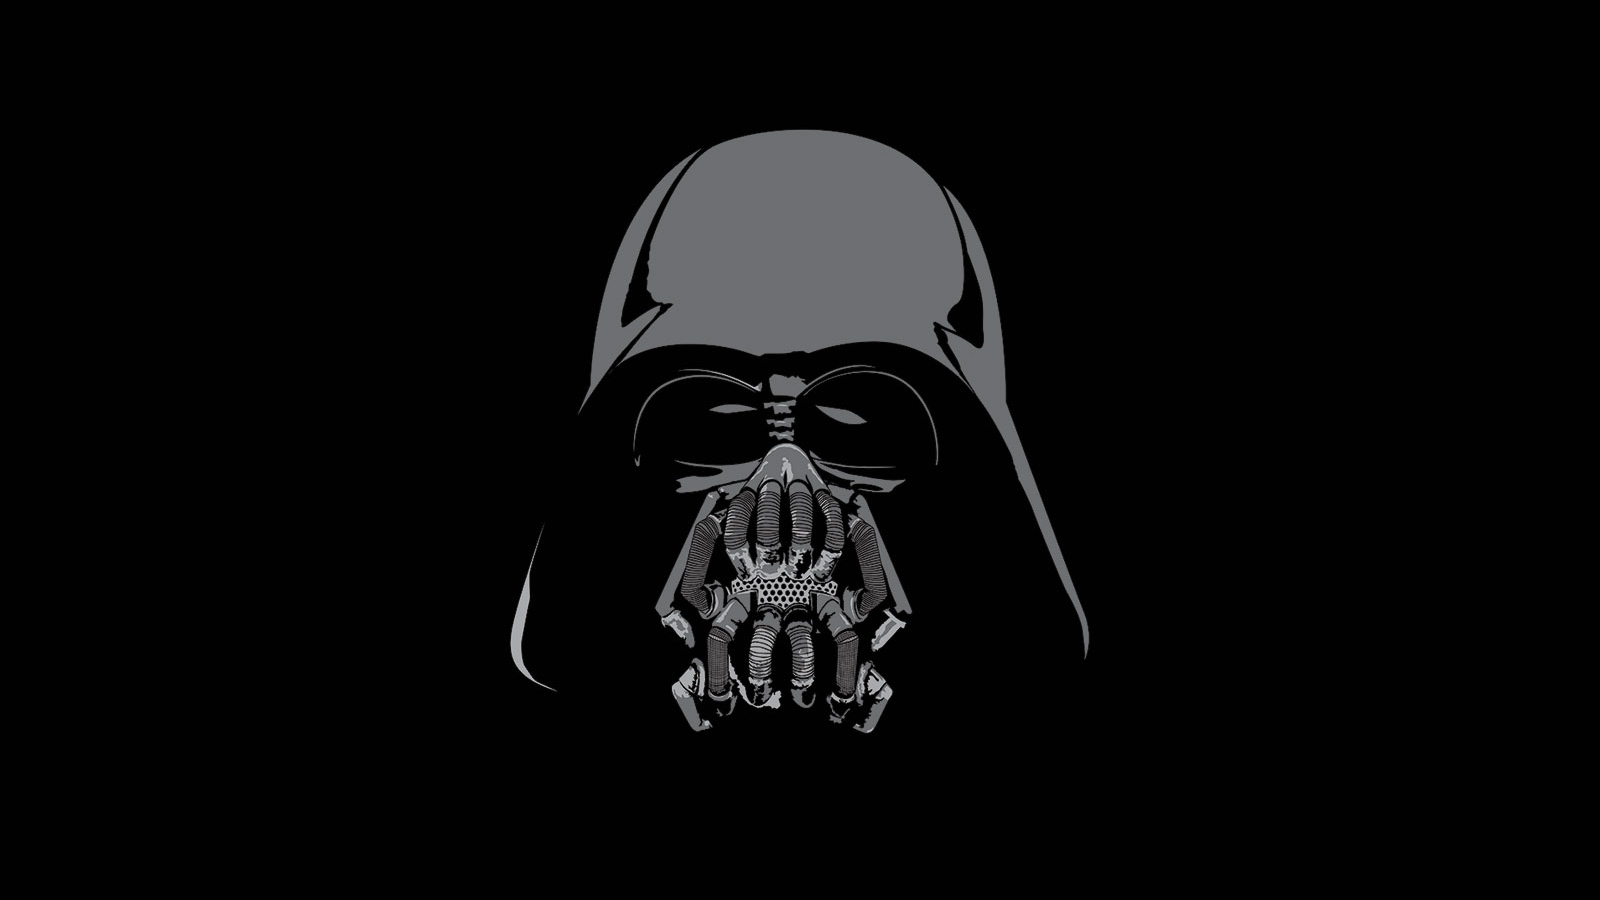 General 1600x900 Star Wars Darth Vader Bane crossover black black background simple background villains movie characters